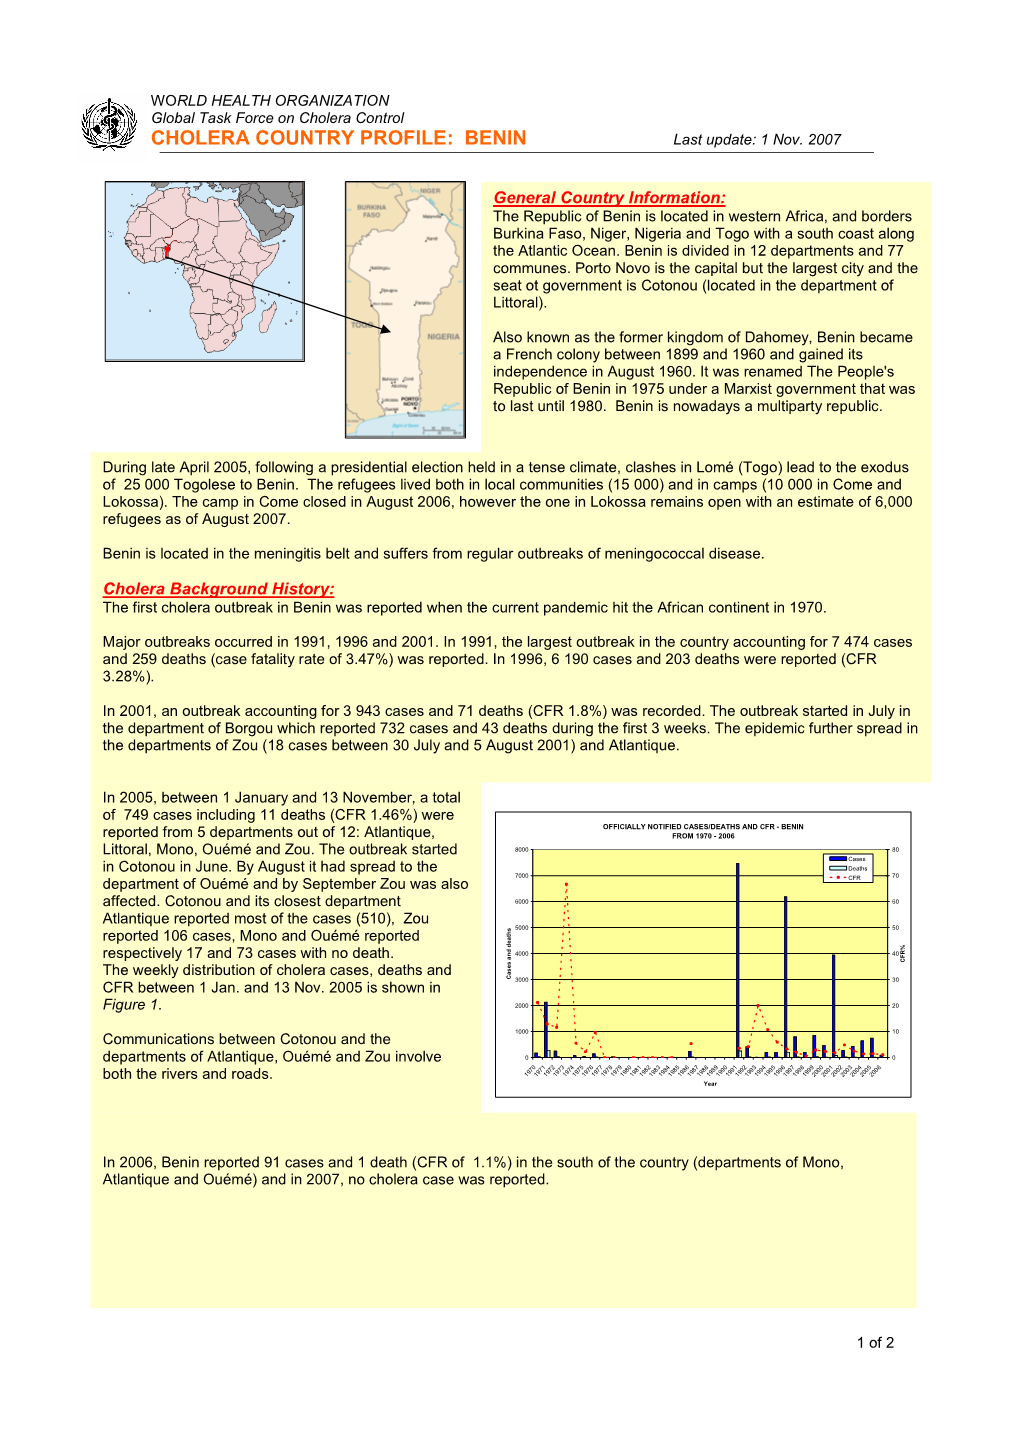 CHOLERA COUNTRY PROFILE: BENIN Last Update: 1 Nov